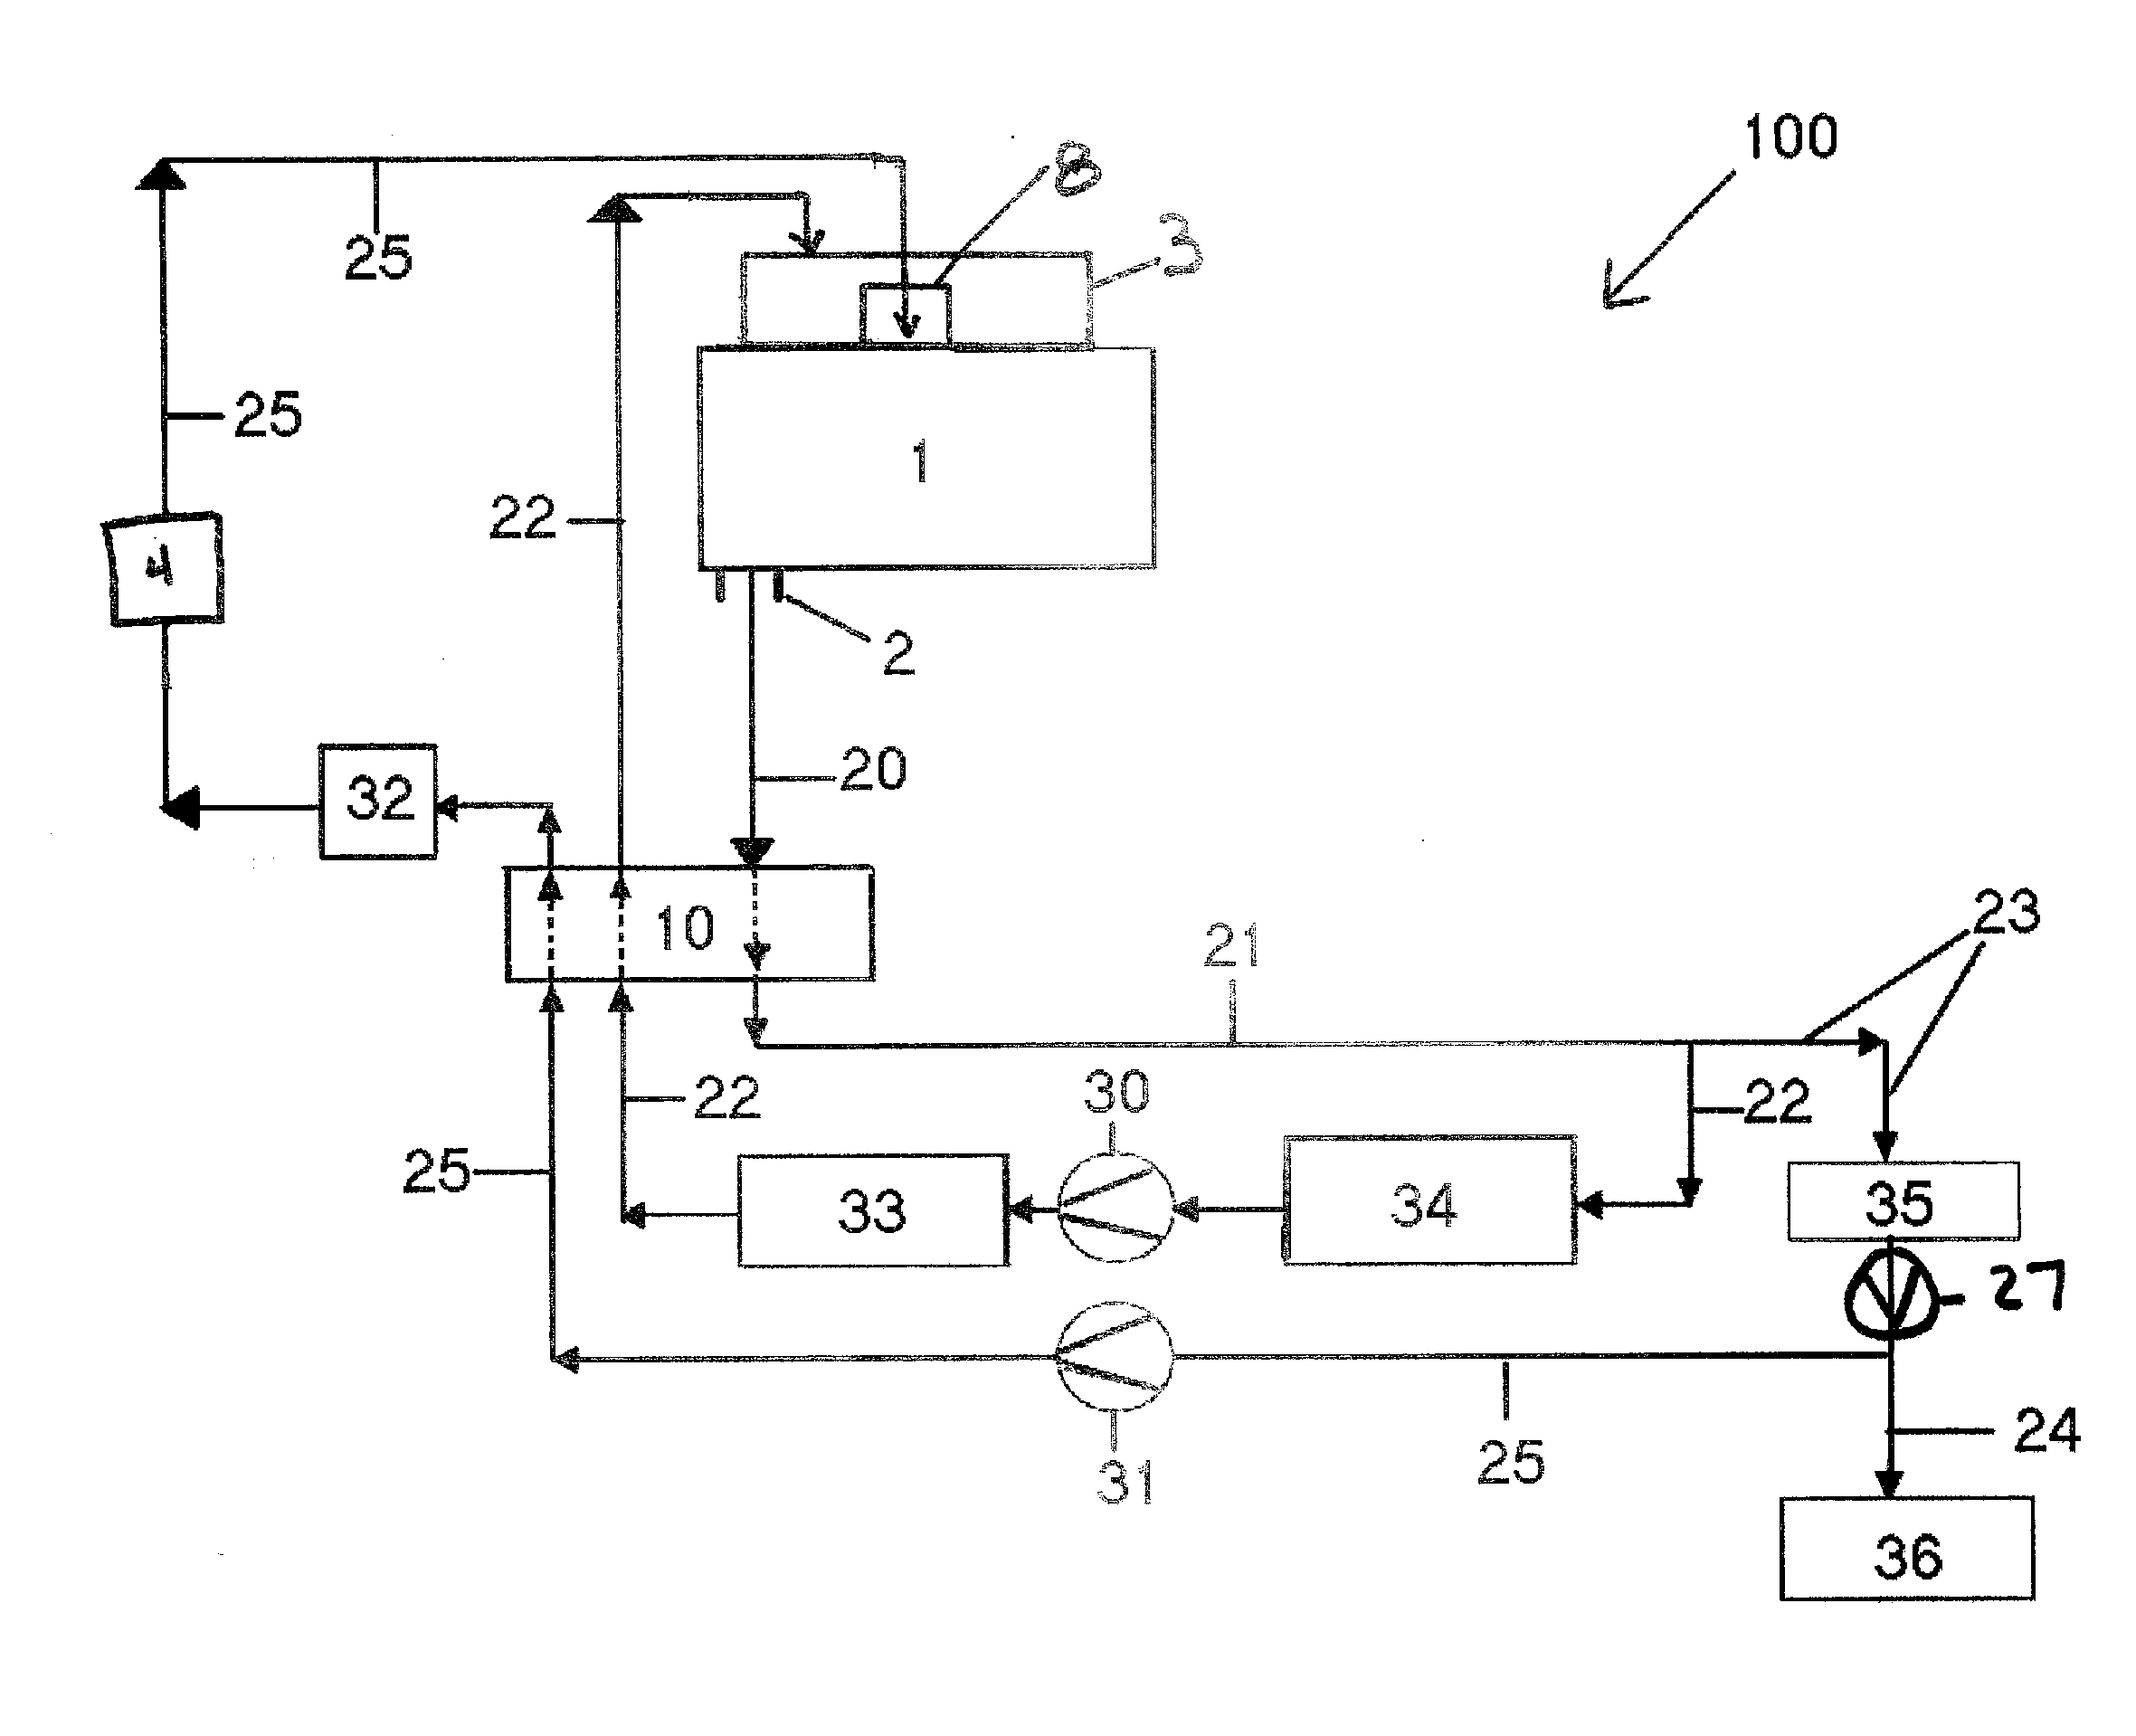 Oxy-fuel combustion oxidant heater internal arrangement